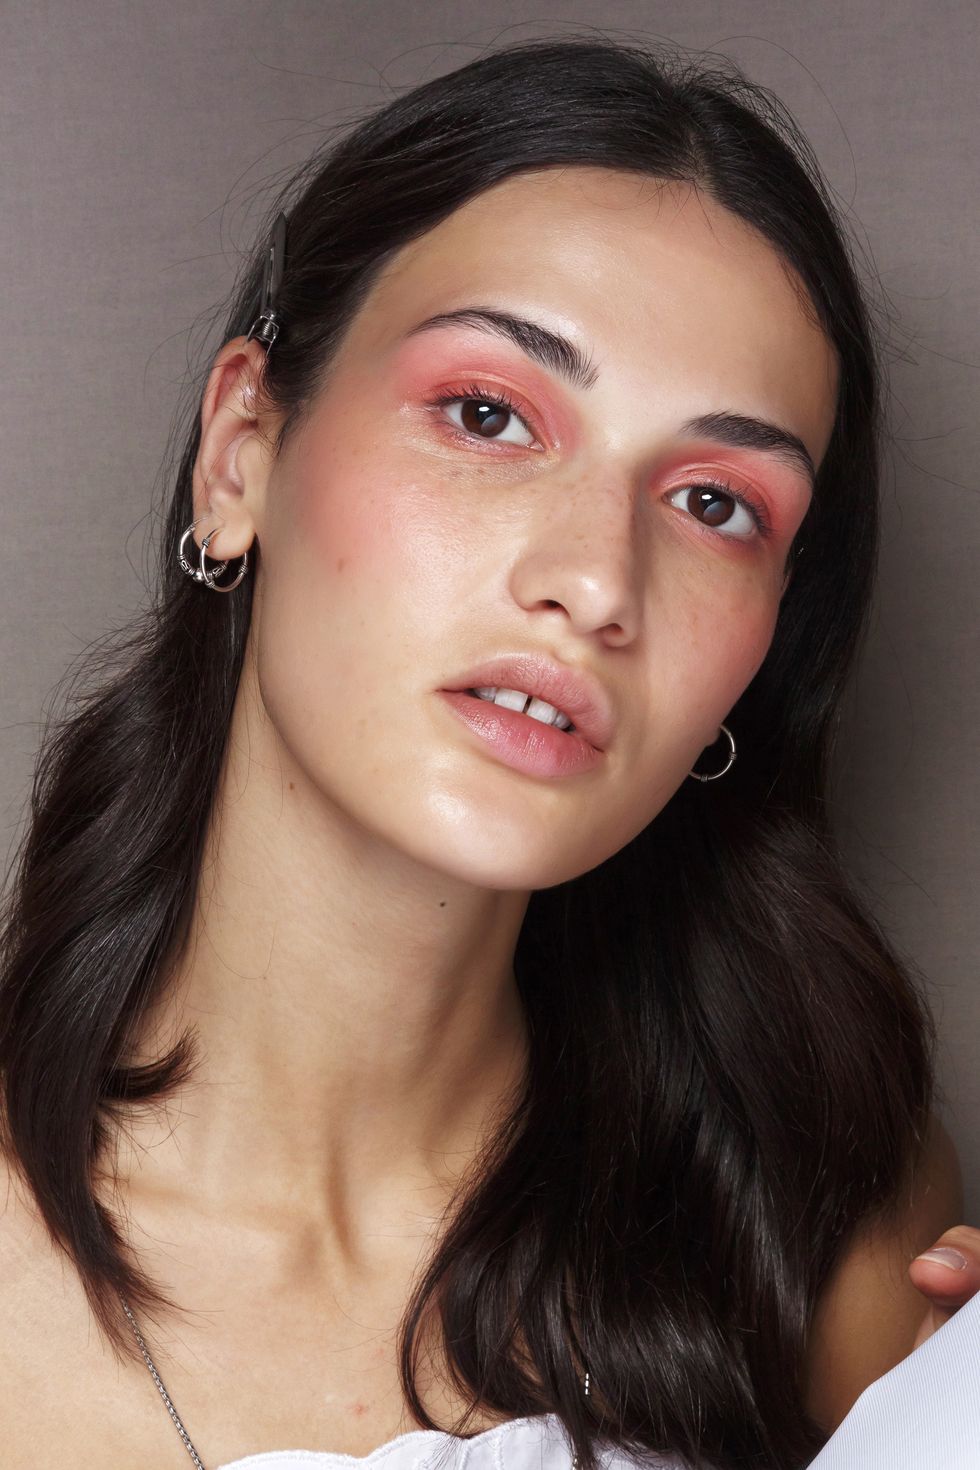 Pantone kleur 2019 - Make-up trends 2019 living coral